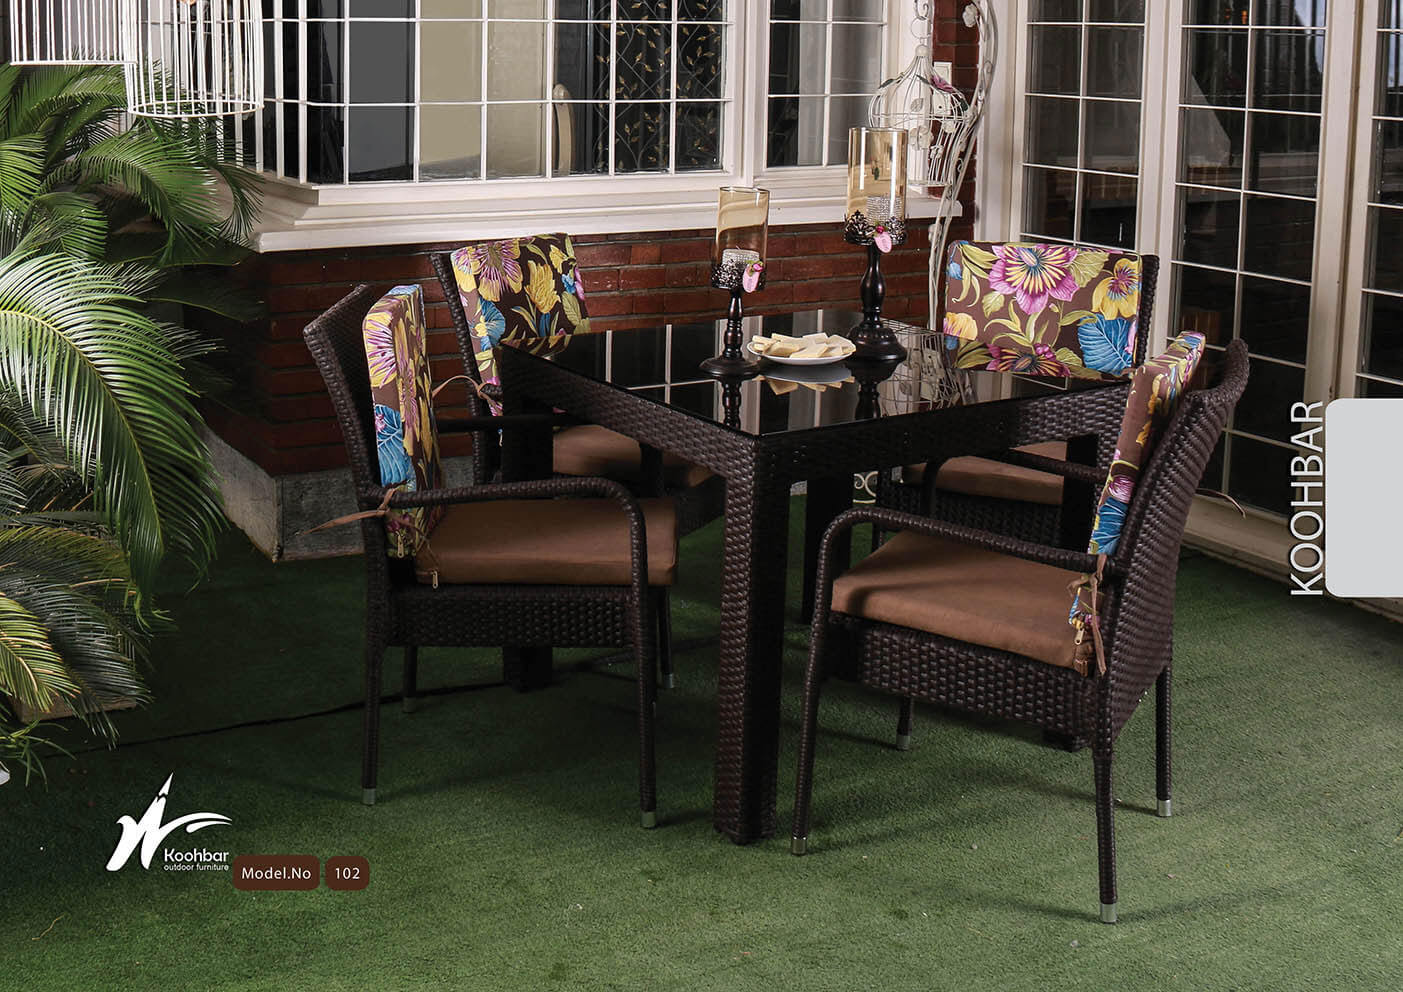 kohbar patio conversation sets 102 model0 - ست میز صندلی حصیری فضای باز کوهبر مدل ۱۰۲ -  - patio-dining-furniture